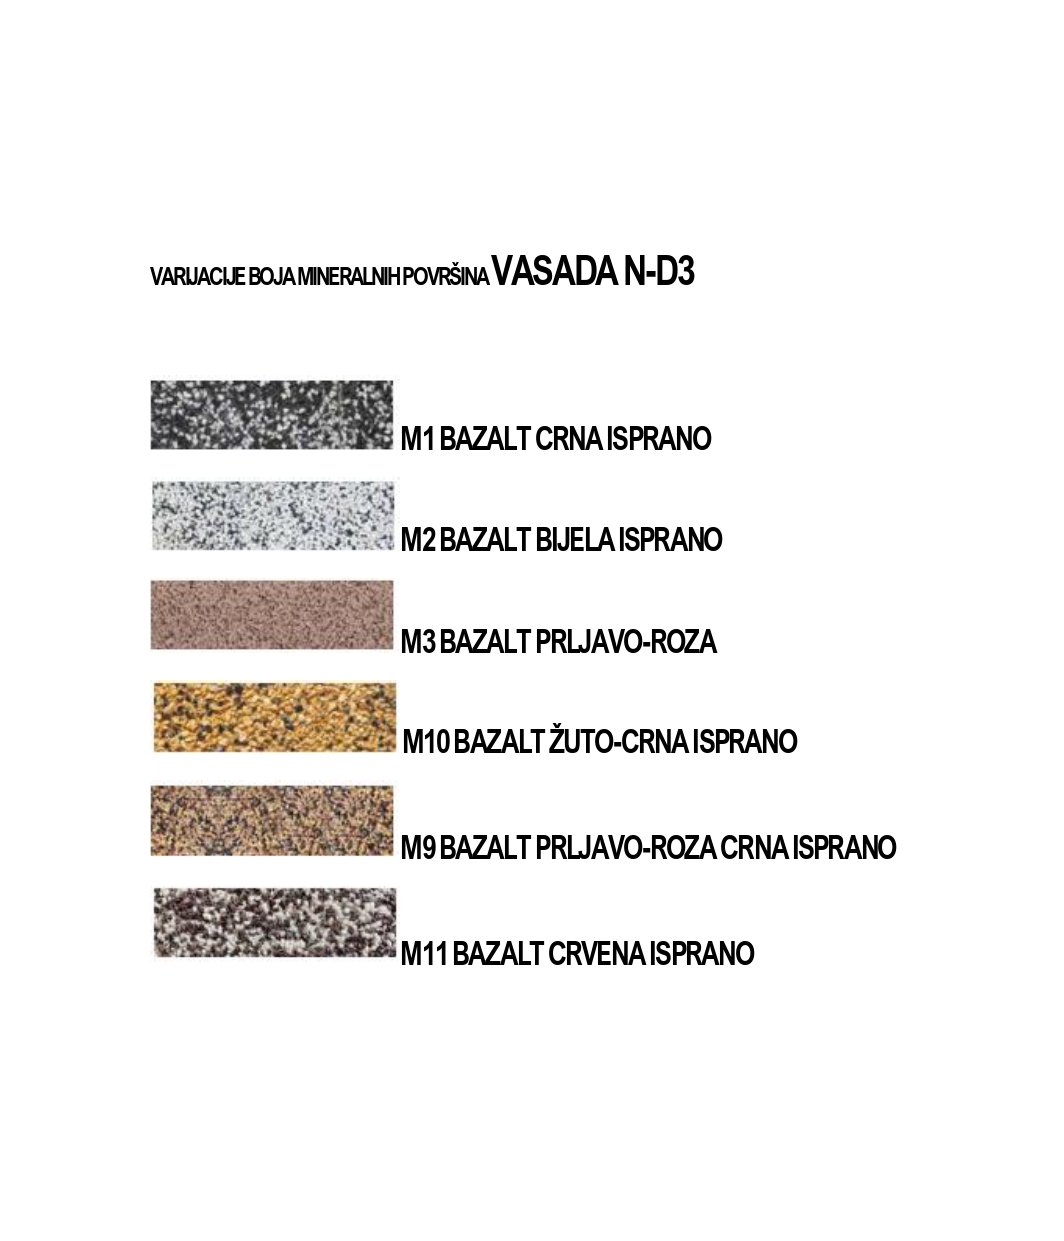 varijacije-boja-mineralnih-povrsina-vasada-n-d3_page-0001